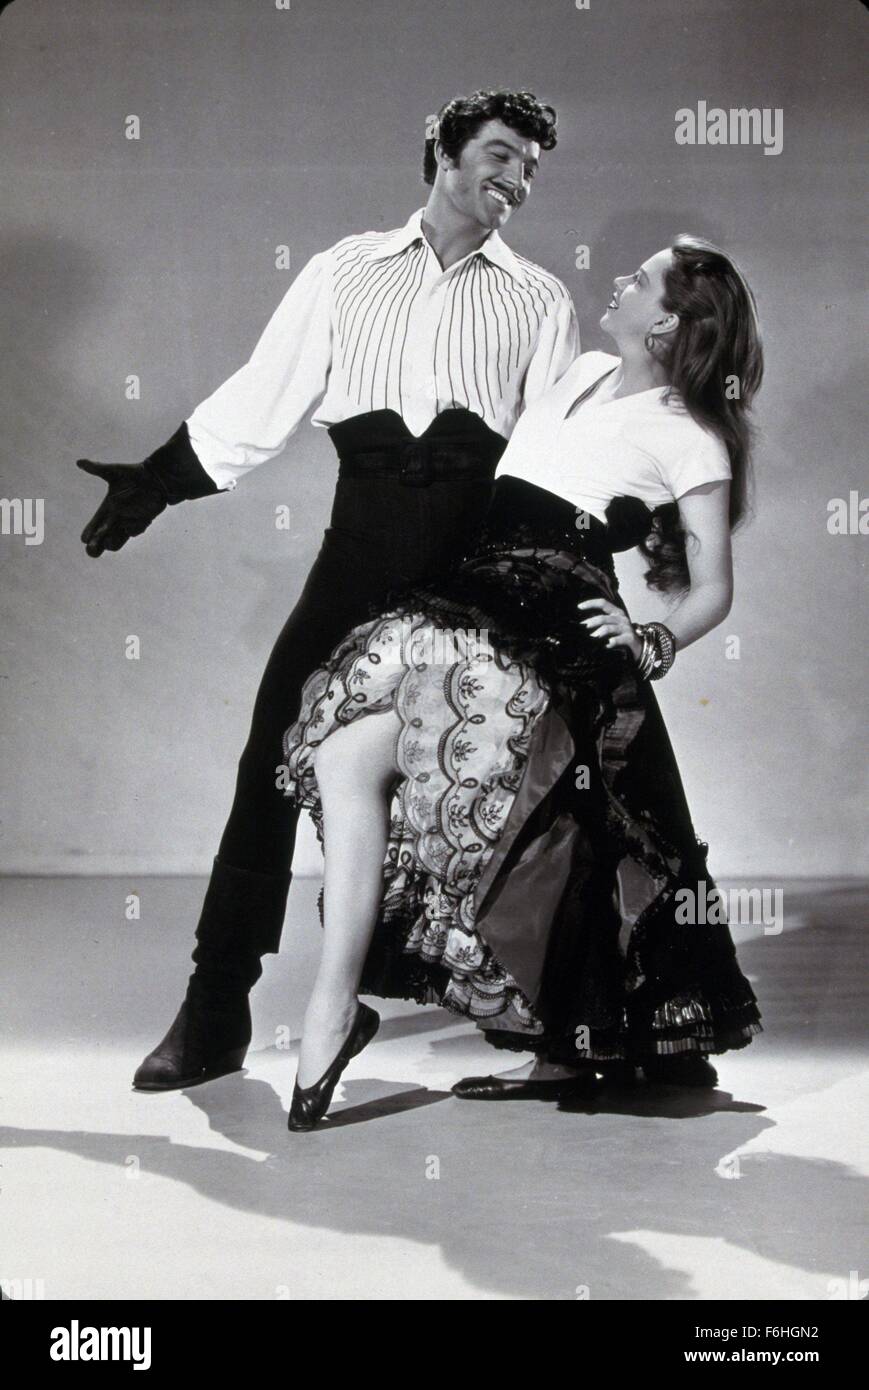 1948, Filmtitel: PIRATE, Regie: VINCENTE MINNELLI, Studio: MGM, abgebildet: JUDY GARLAND, GENE KELLY. (Bild Kredit: SNAP) Stockfoto